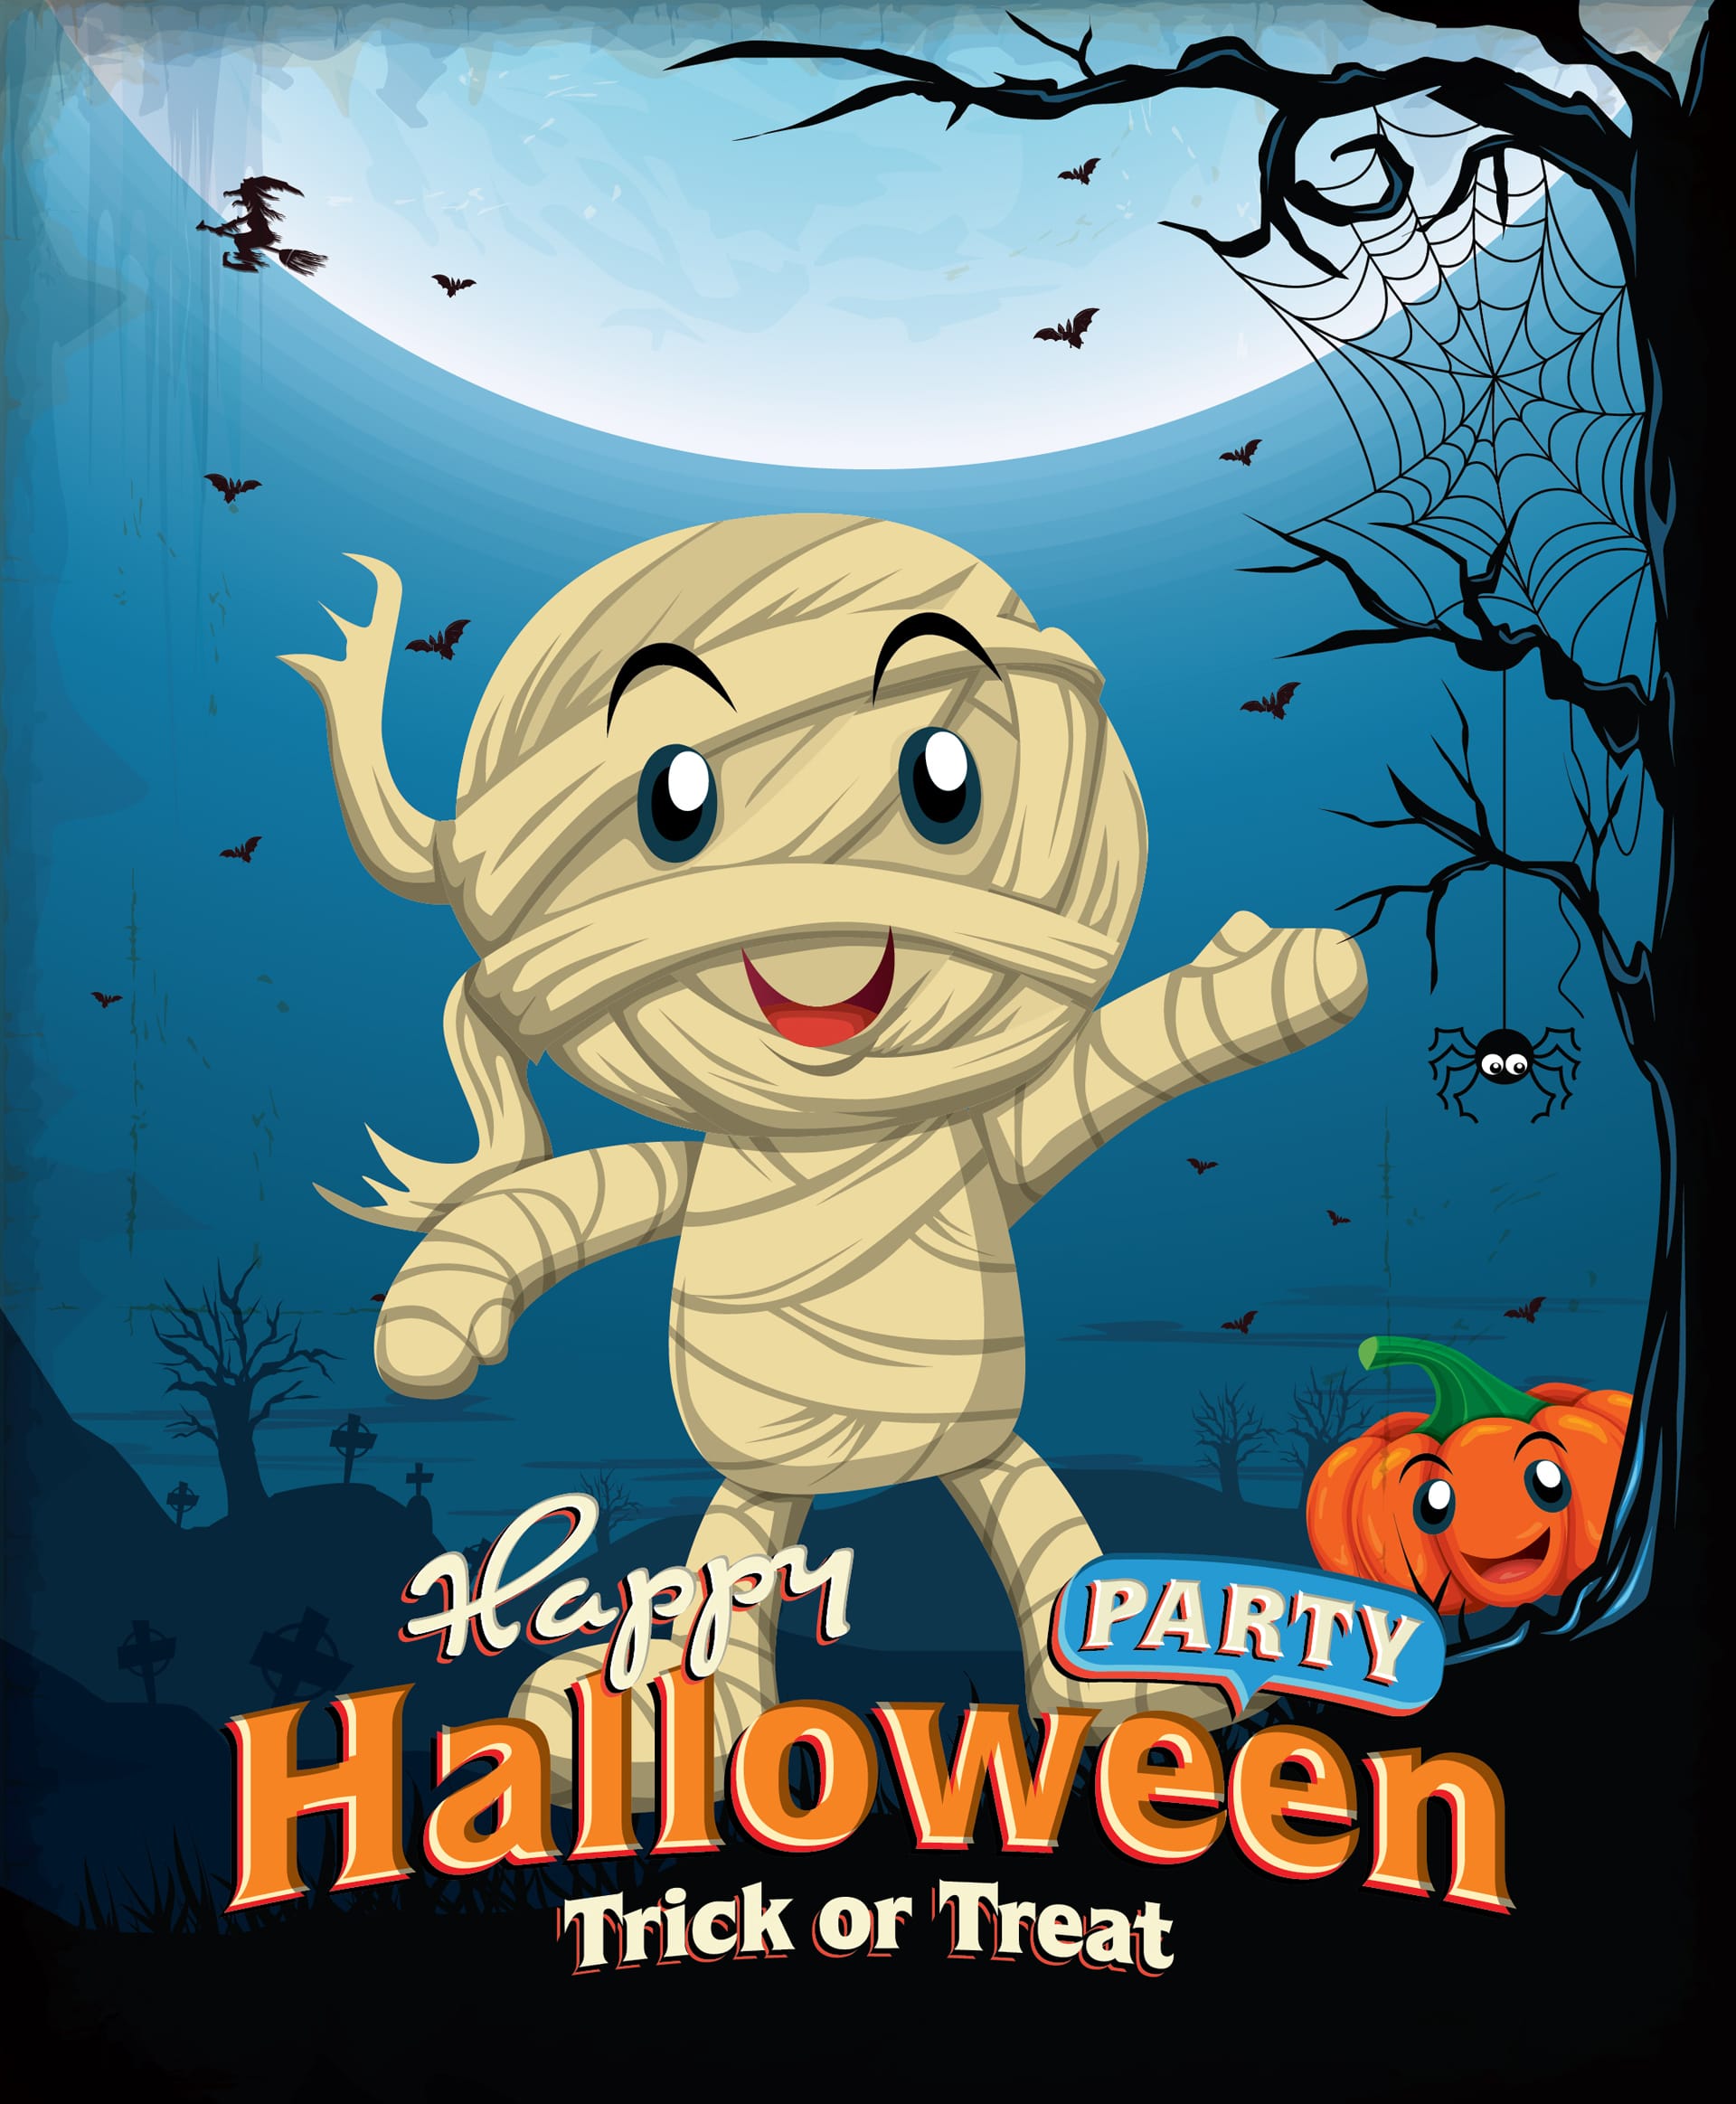 Vintage halloween poster design with kid mummy costume